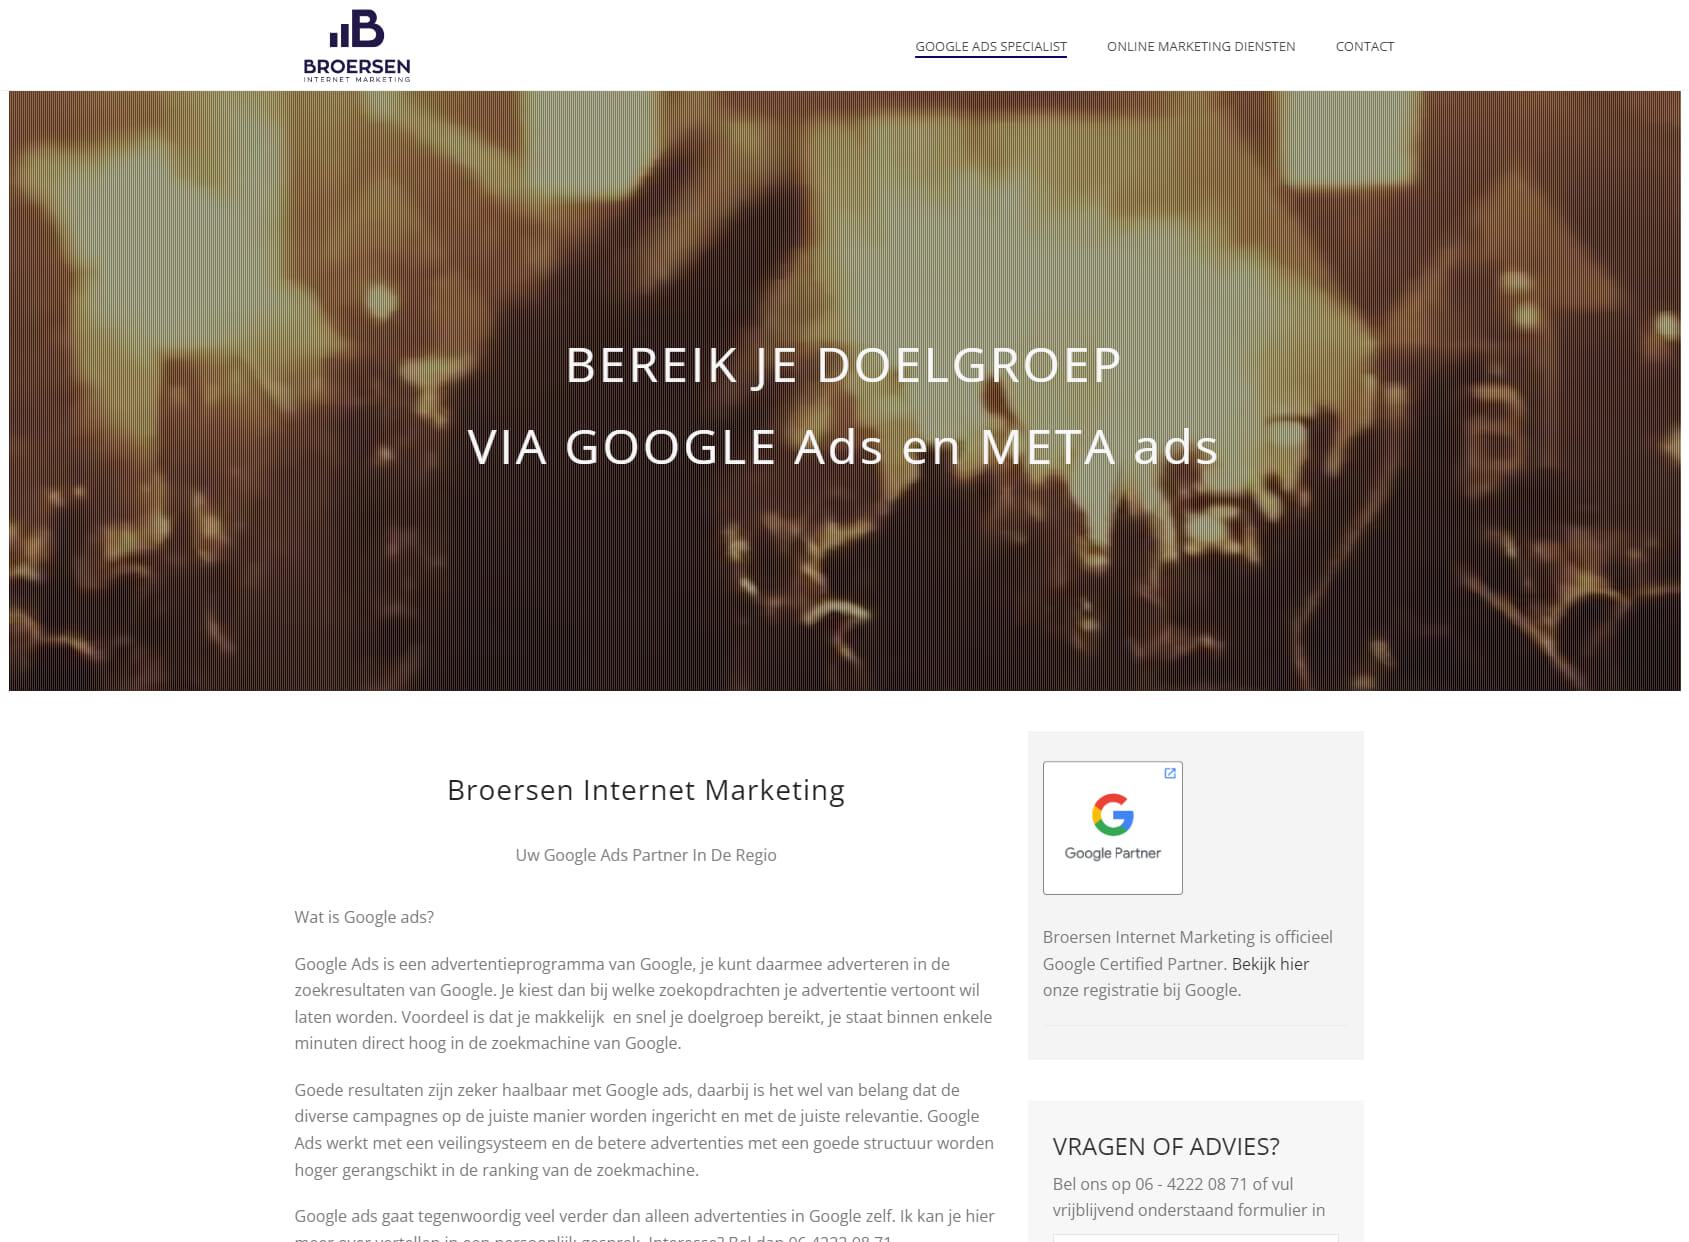 Broersen Internet Marketing - Google Adwords Specialist